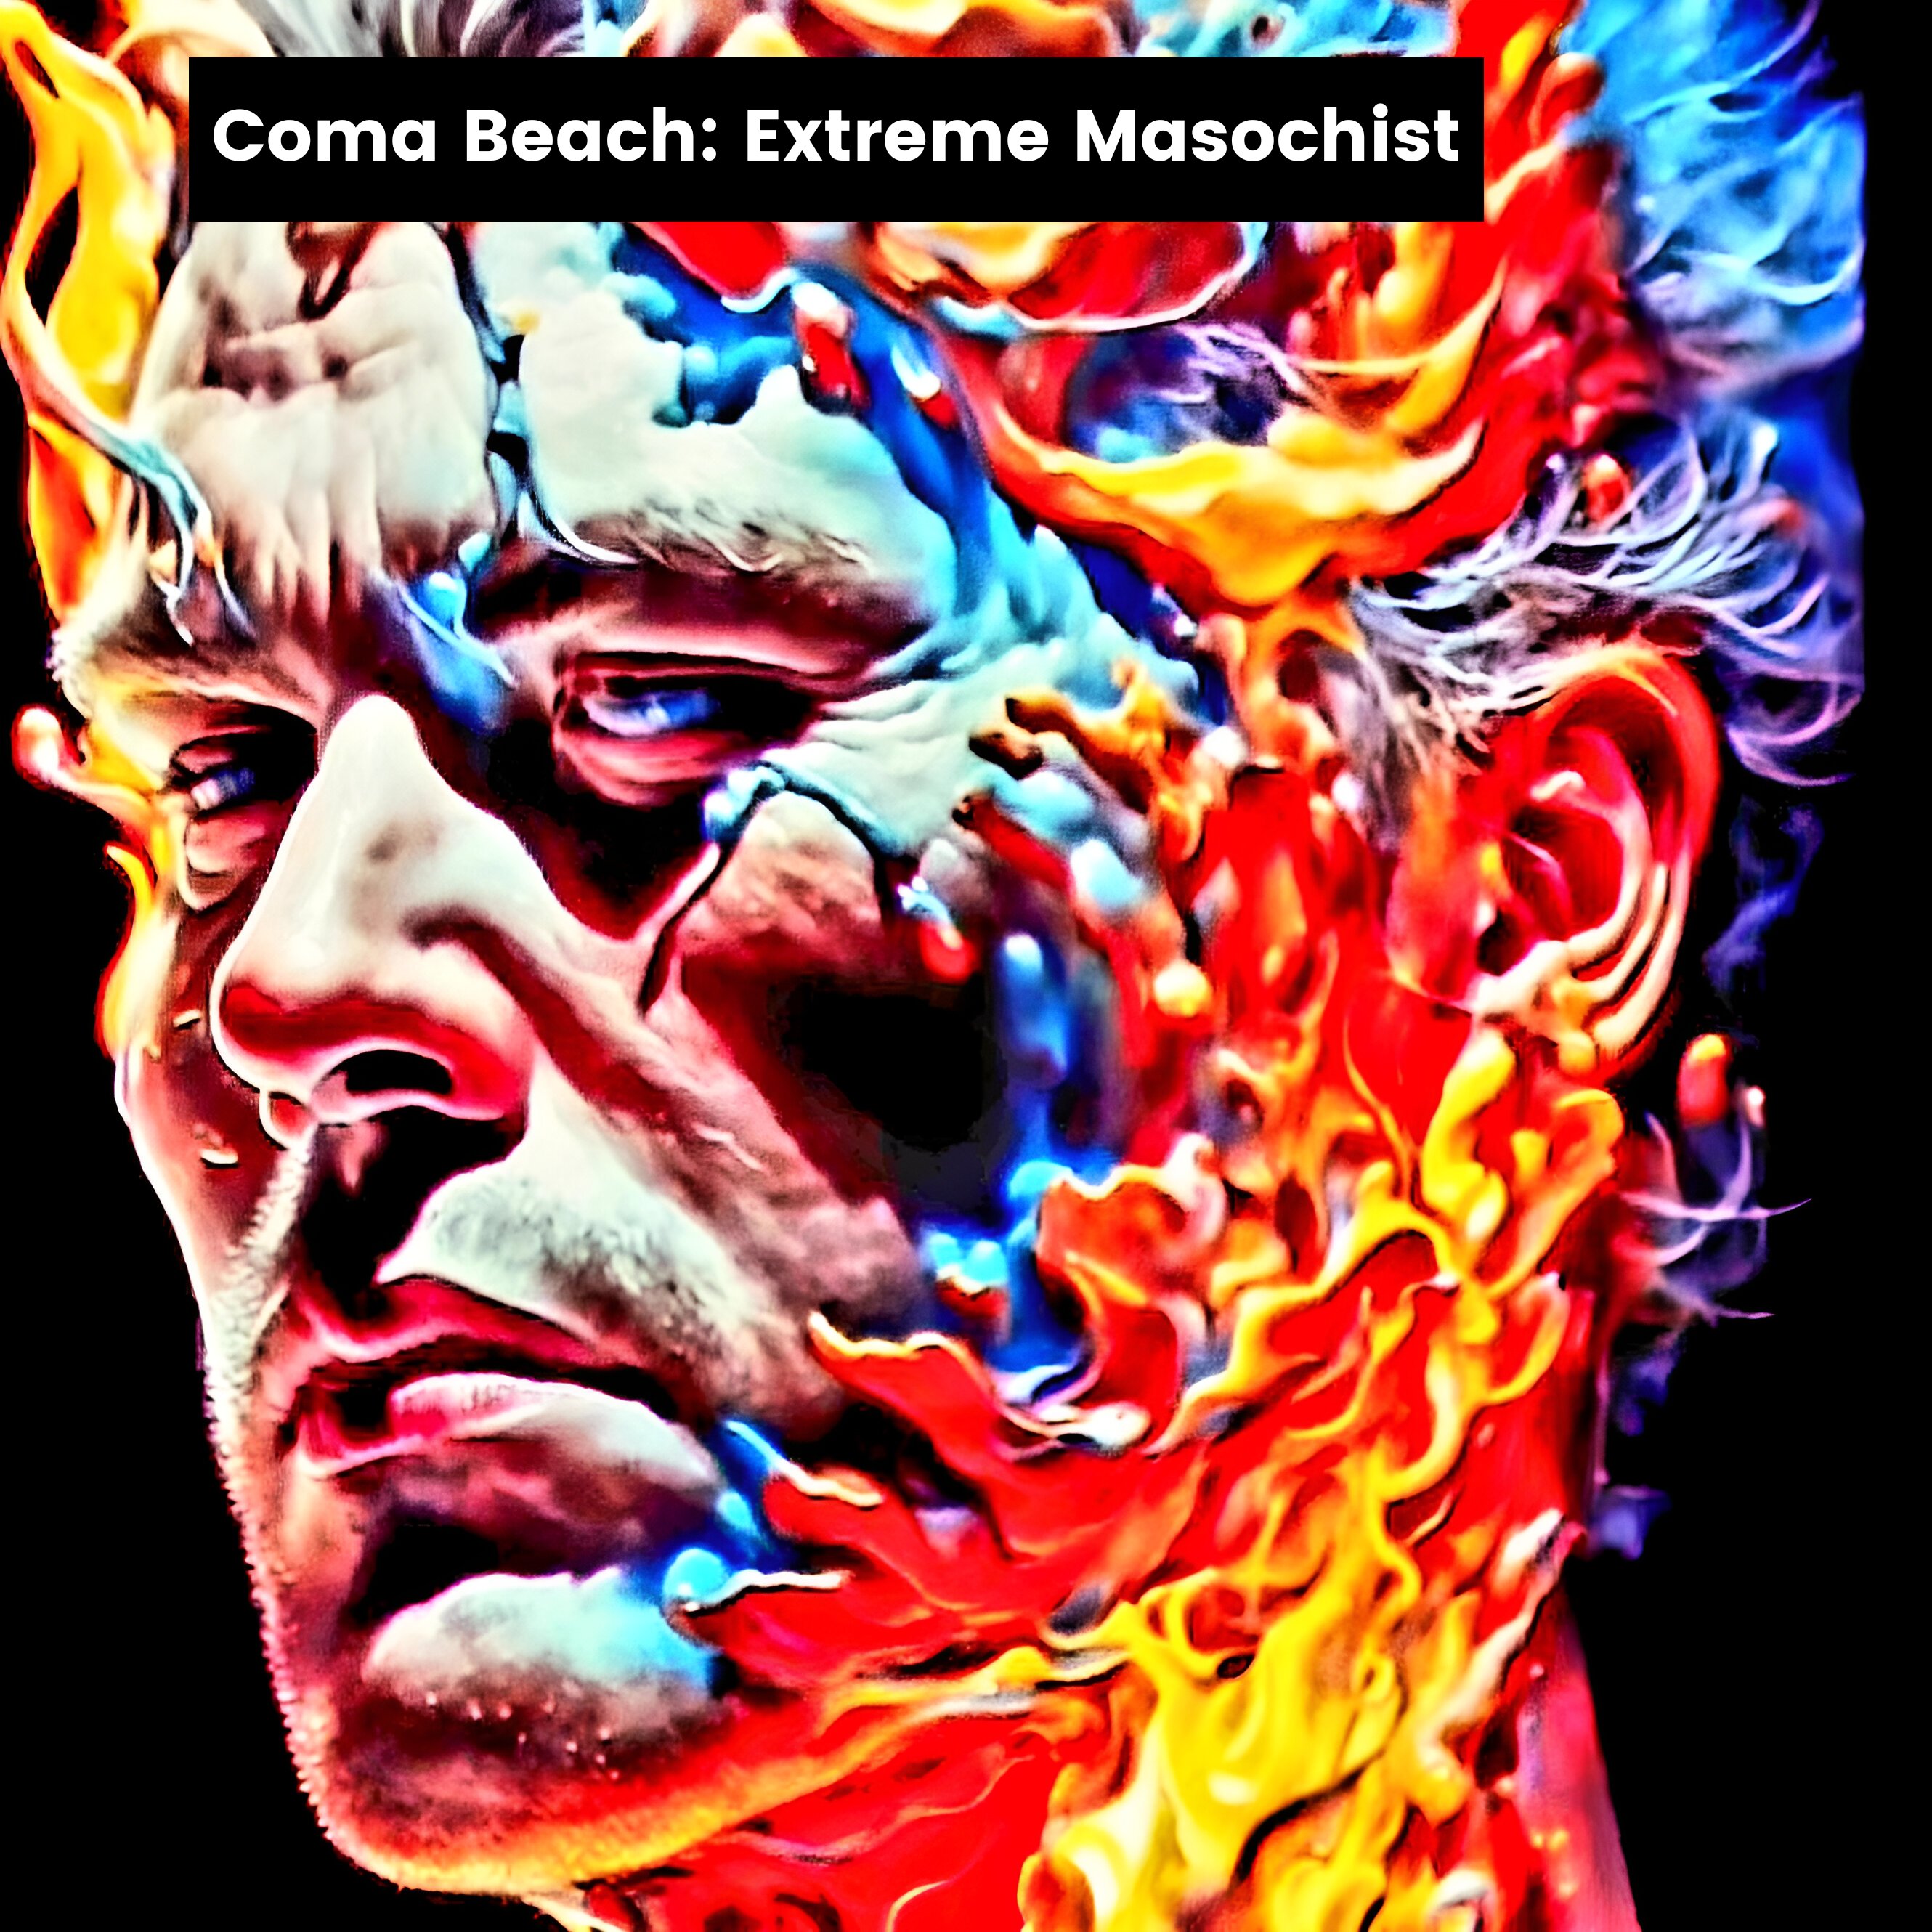 Coma Beach – “Extreme Masochist”